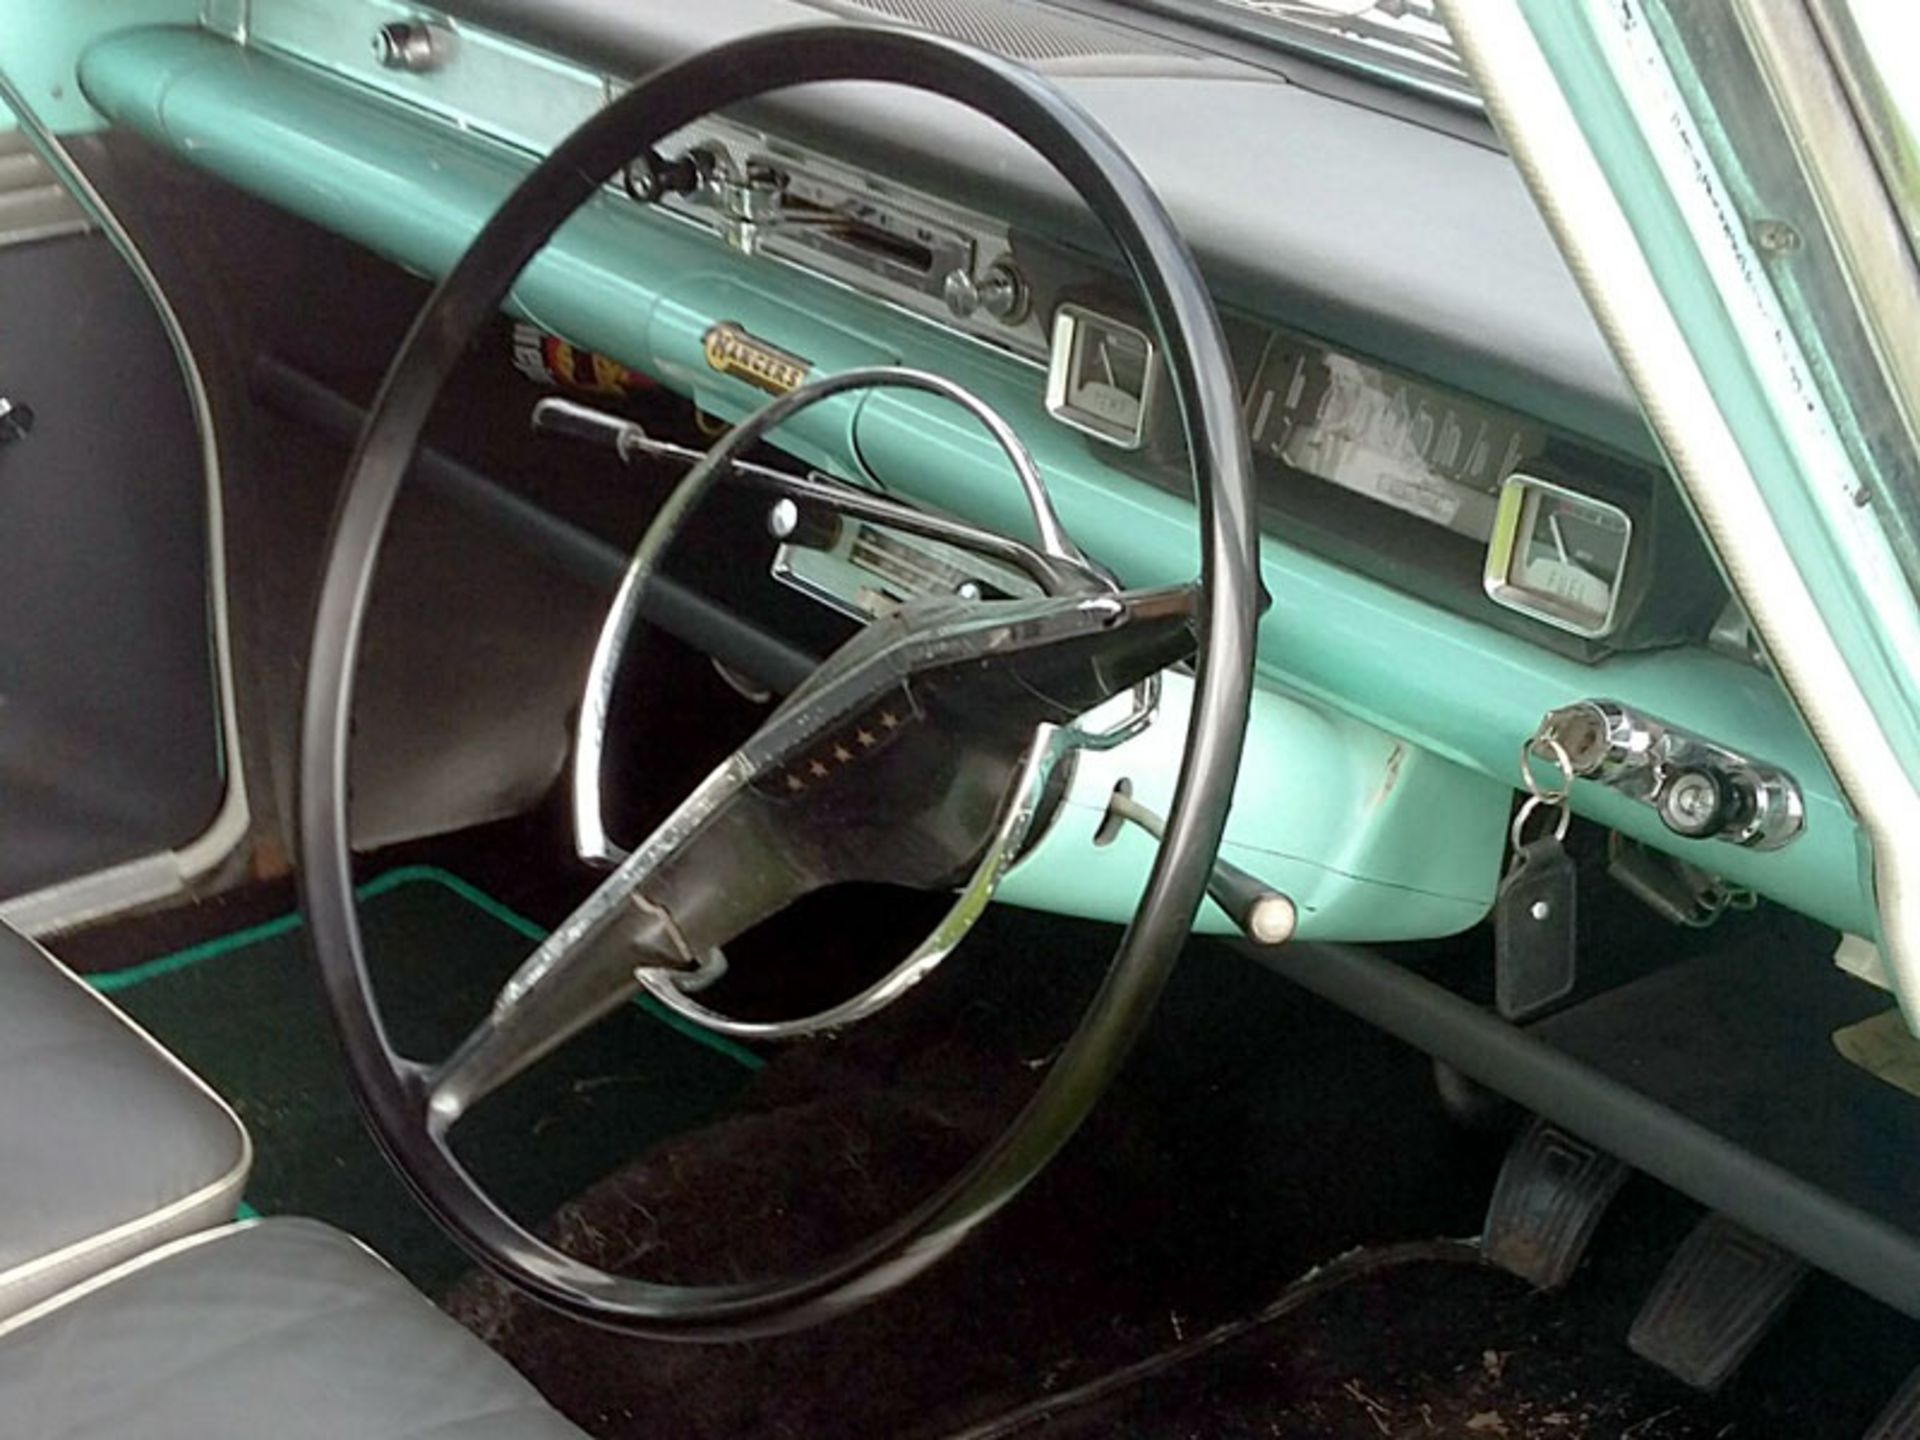 1961 Ford Consul Classic De Luxe - Image 3 of 8